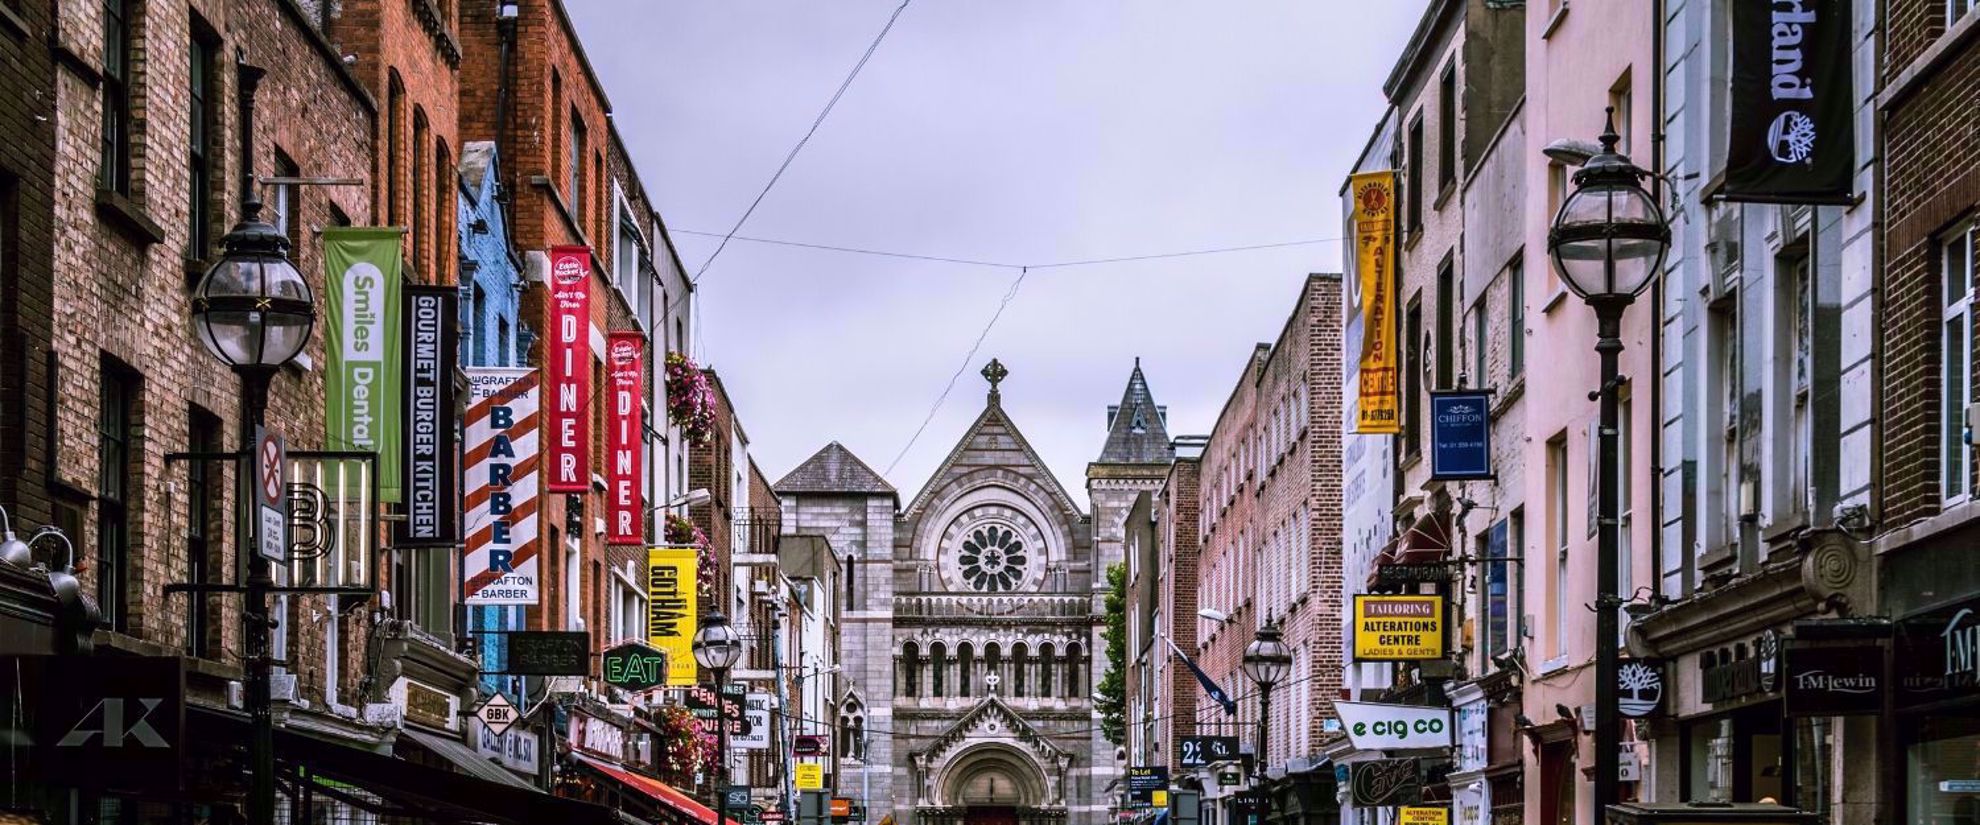 Dublin, Ireland city street view buildings